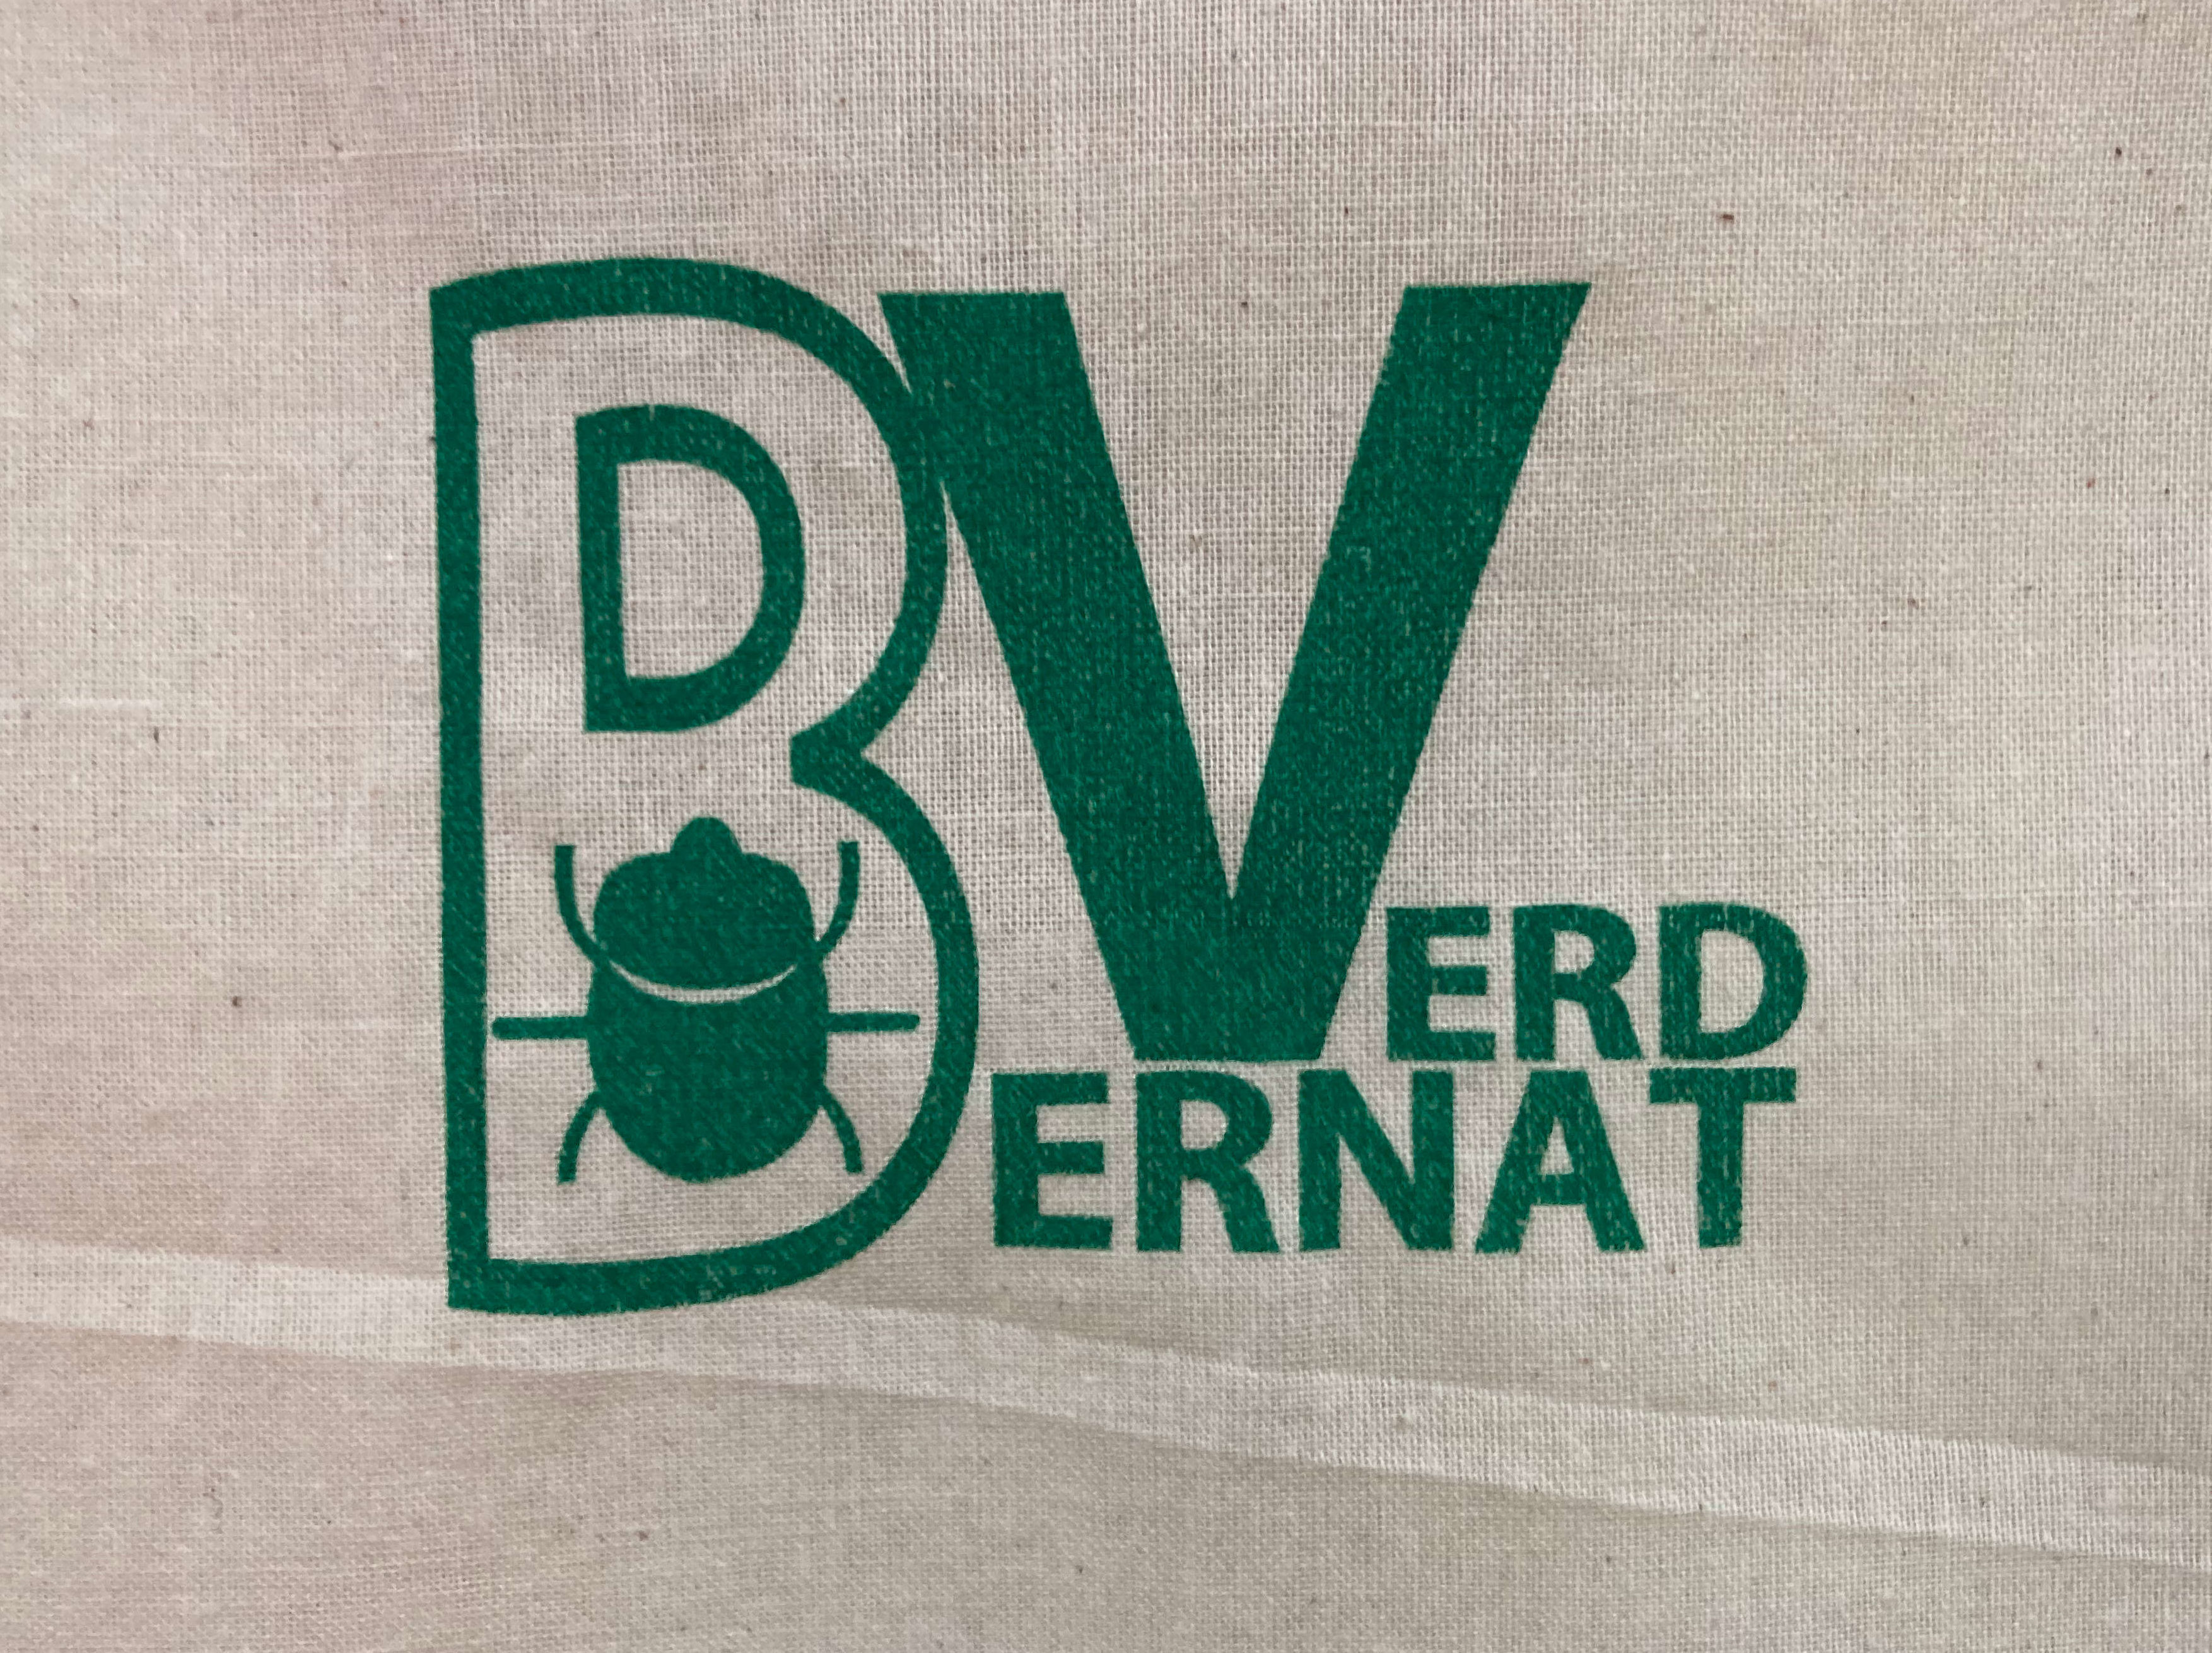 Taller Bernat Verd logo serigrafiat